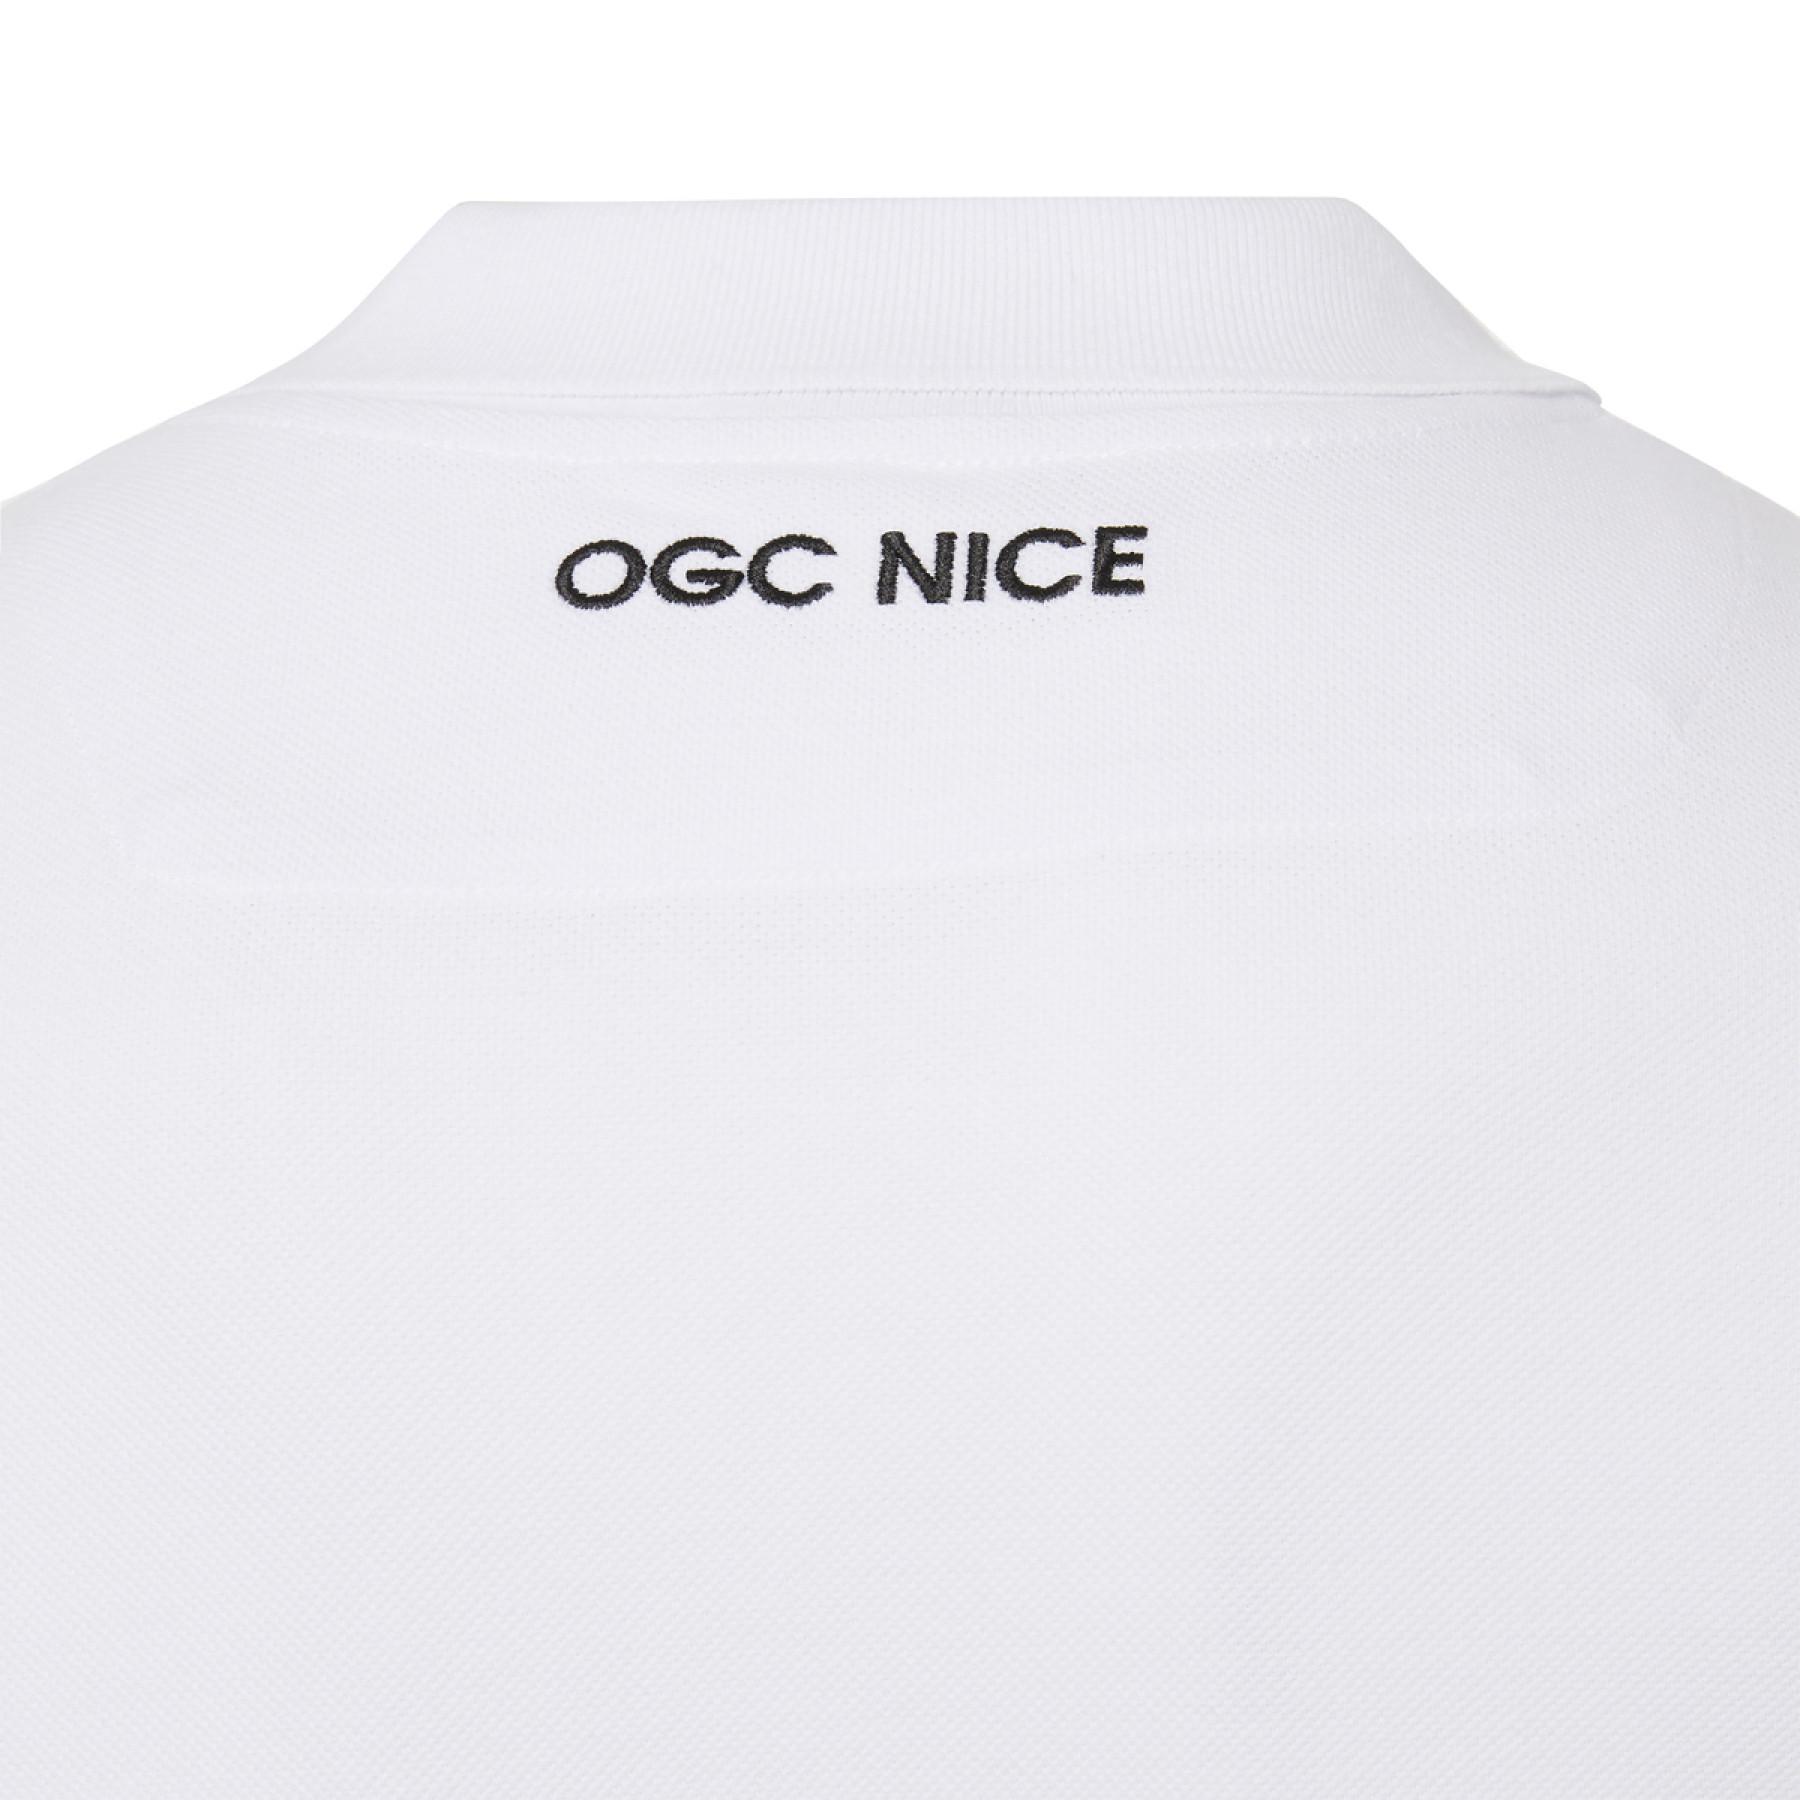 Polotröja för resor OGC Nice 2020/21